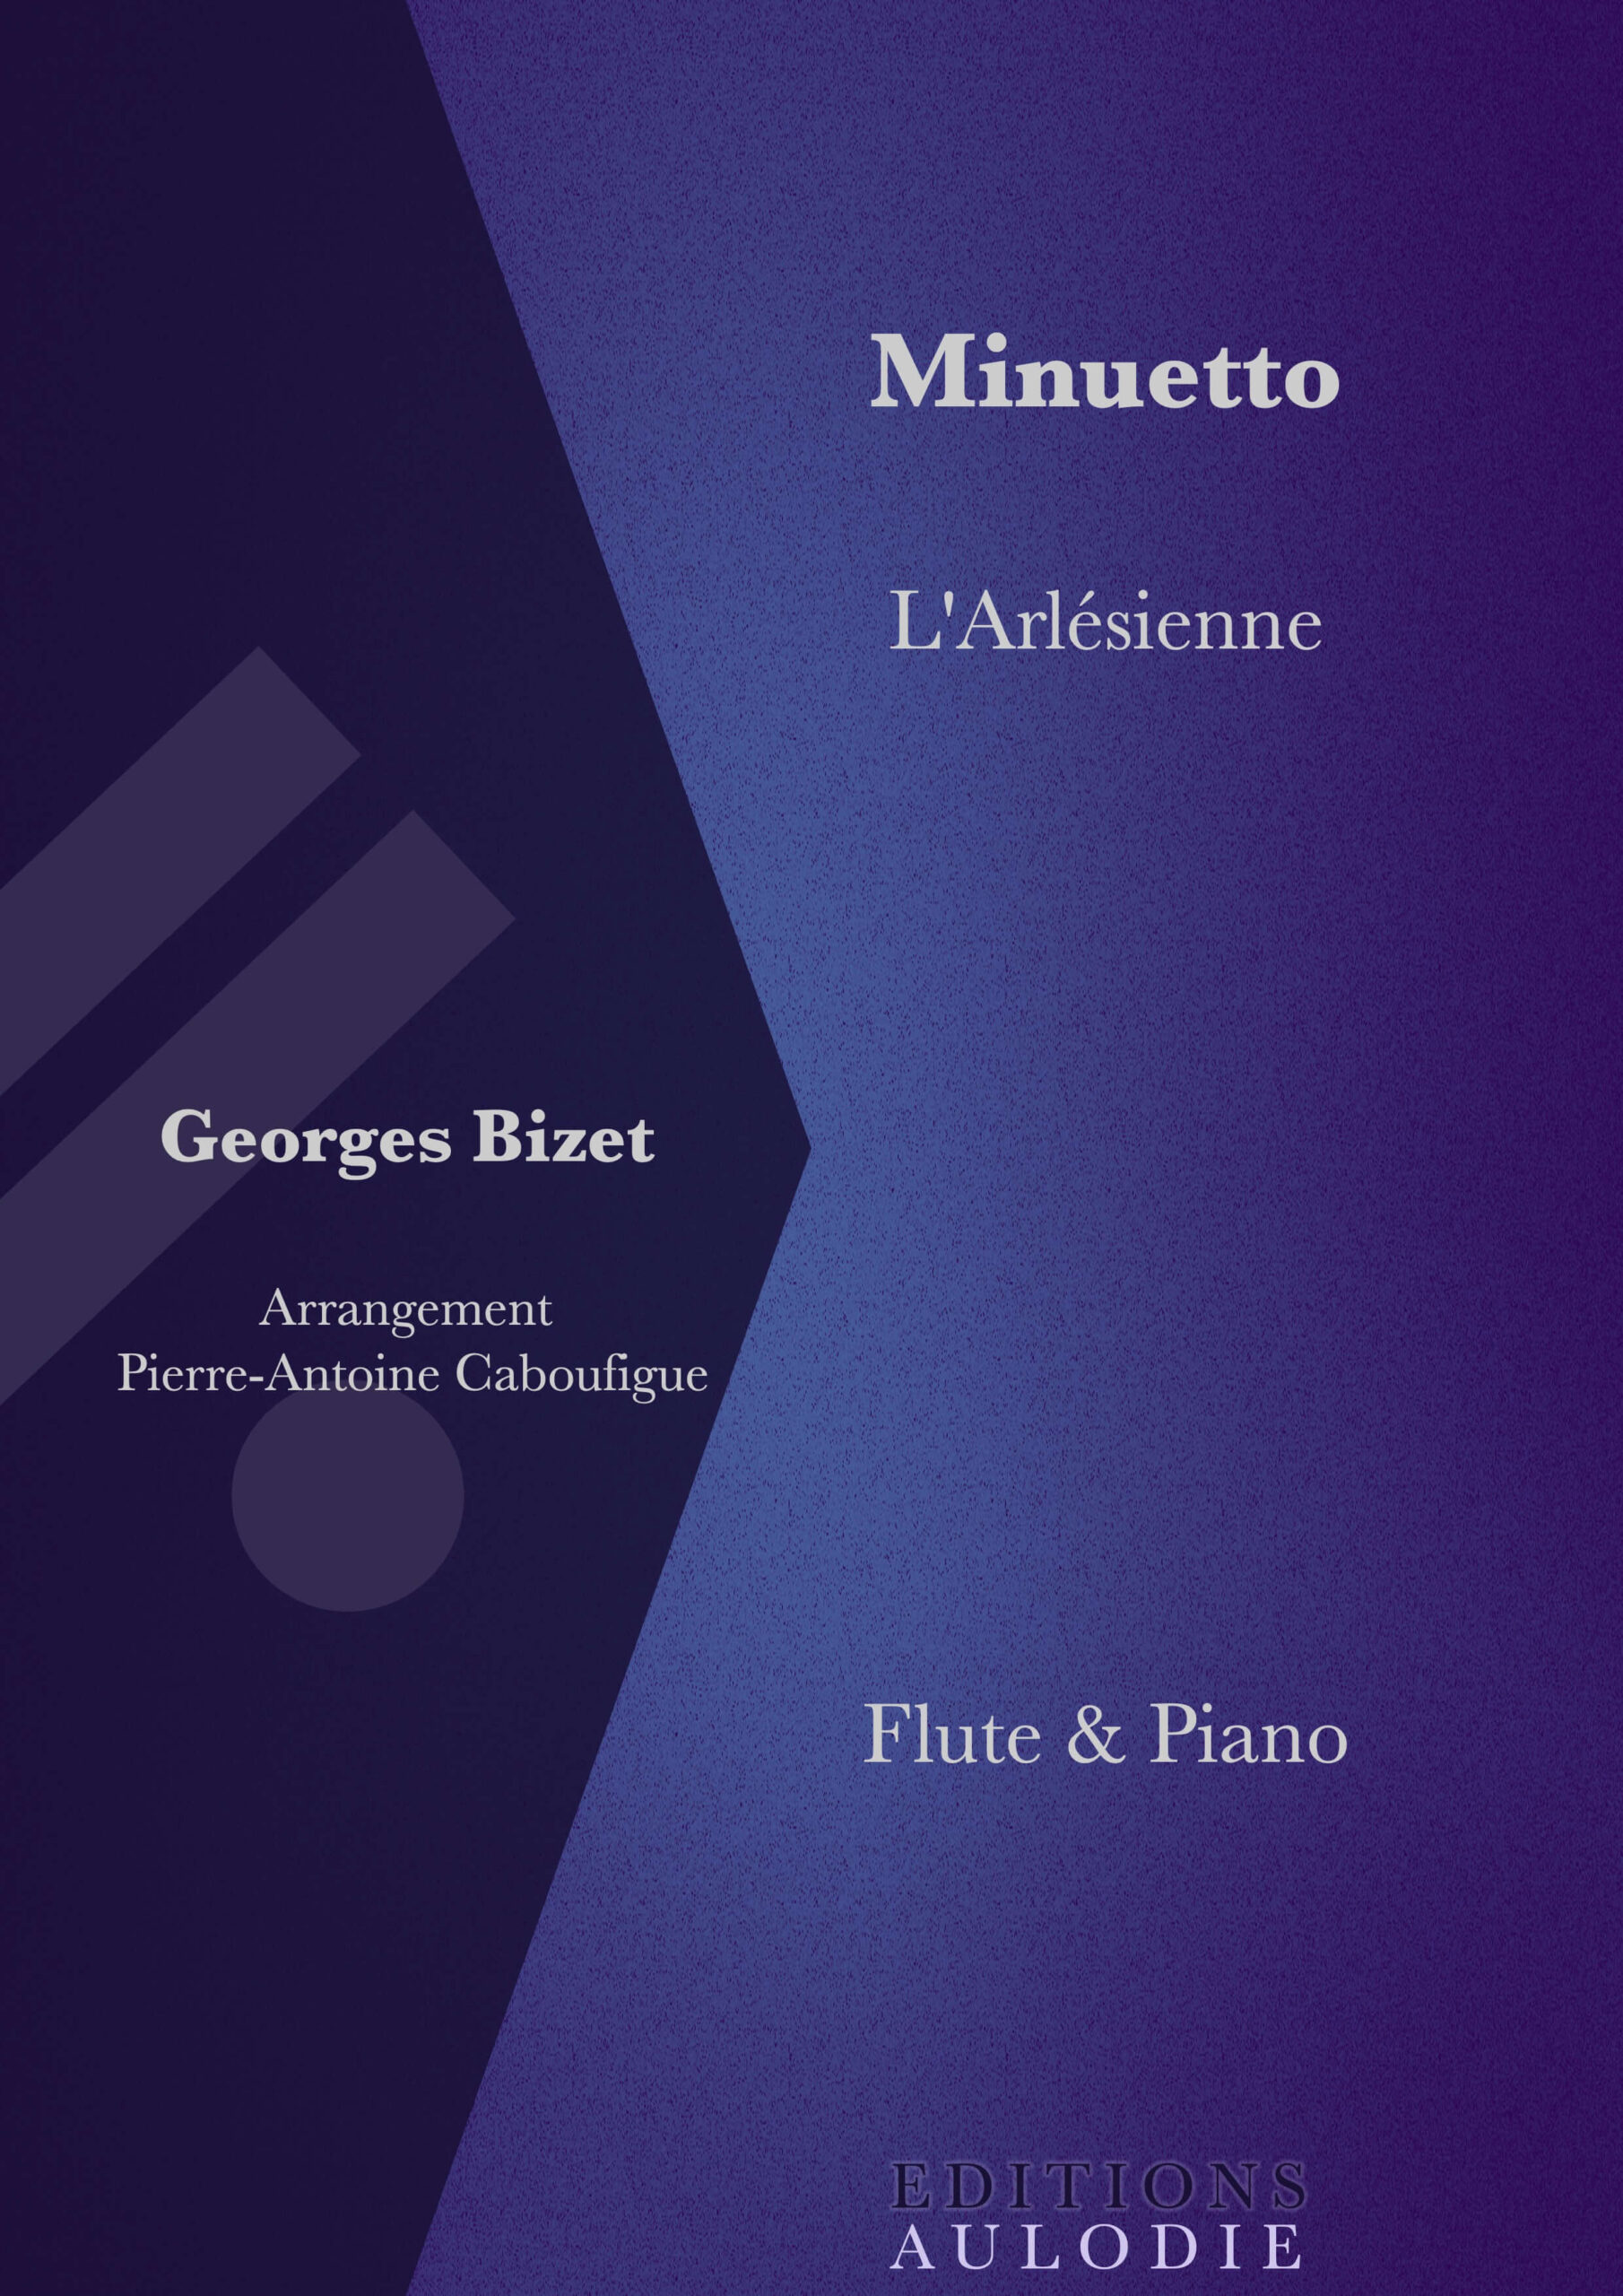 EA01056-Minuetto-LArlesienne-Georges_Bizet-Duo